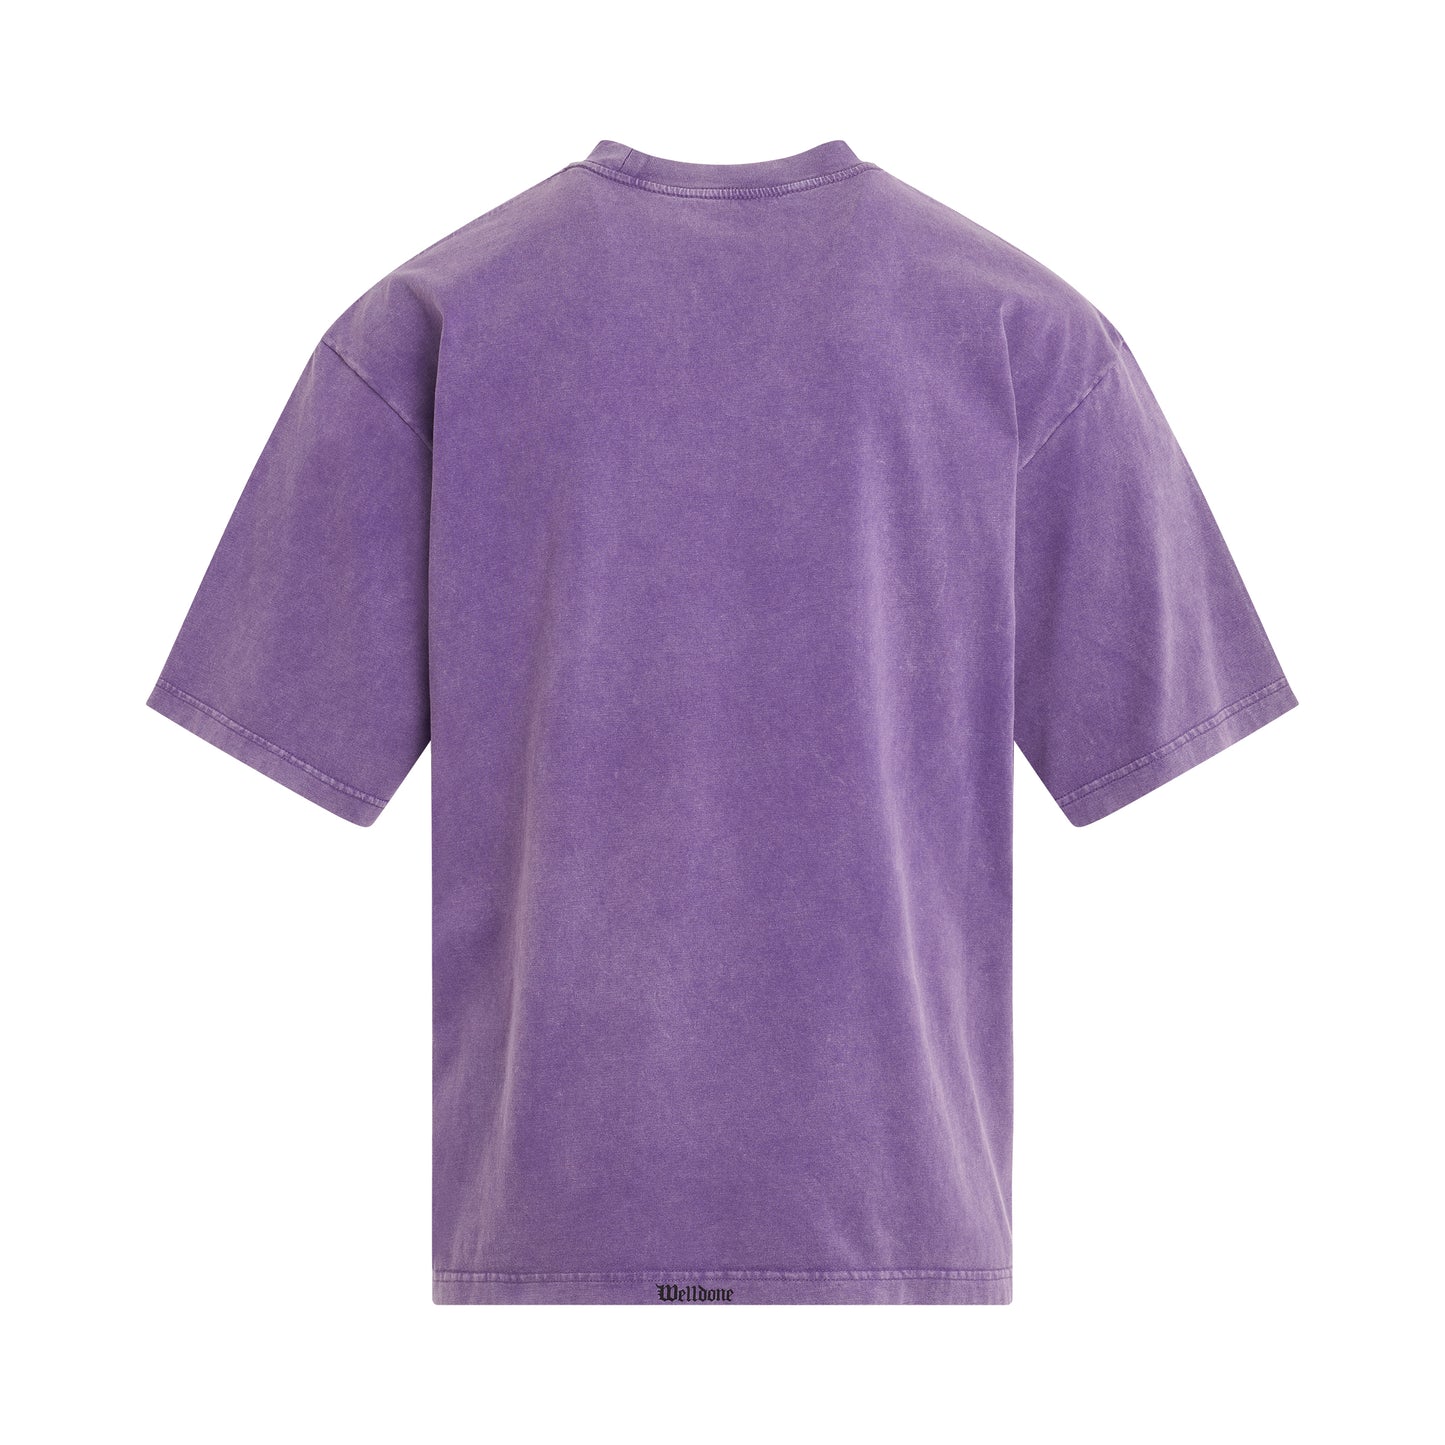 Vintage Horror Print T-Shirt in Purple